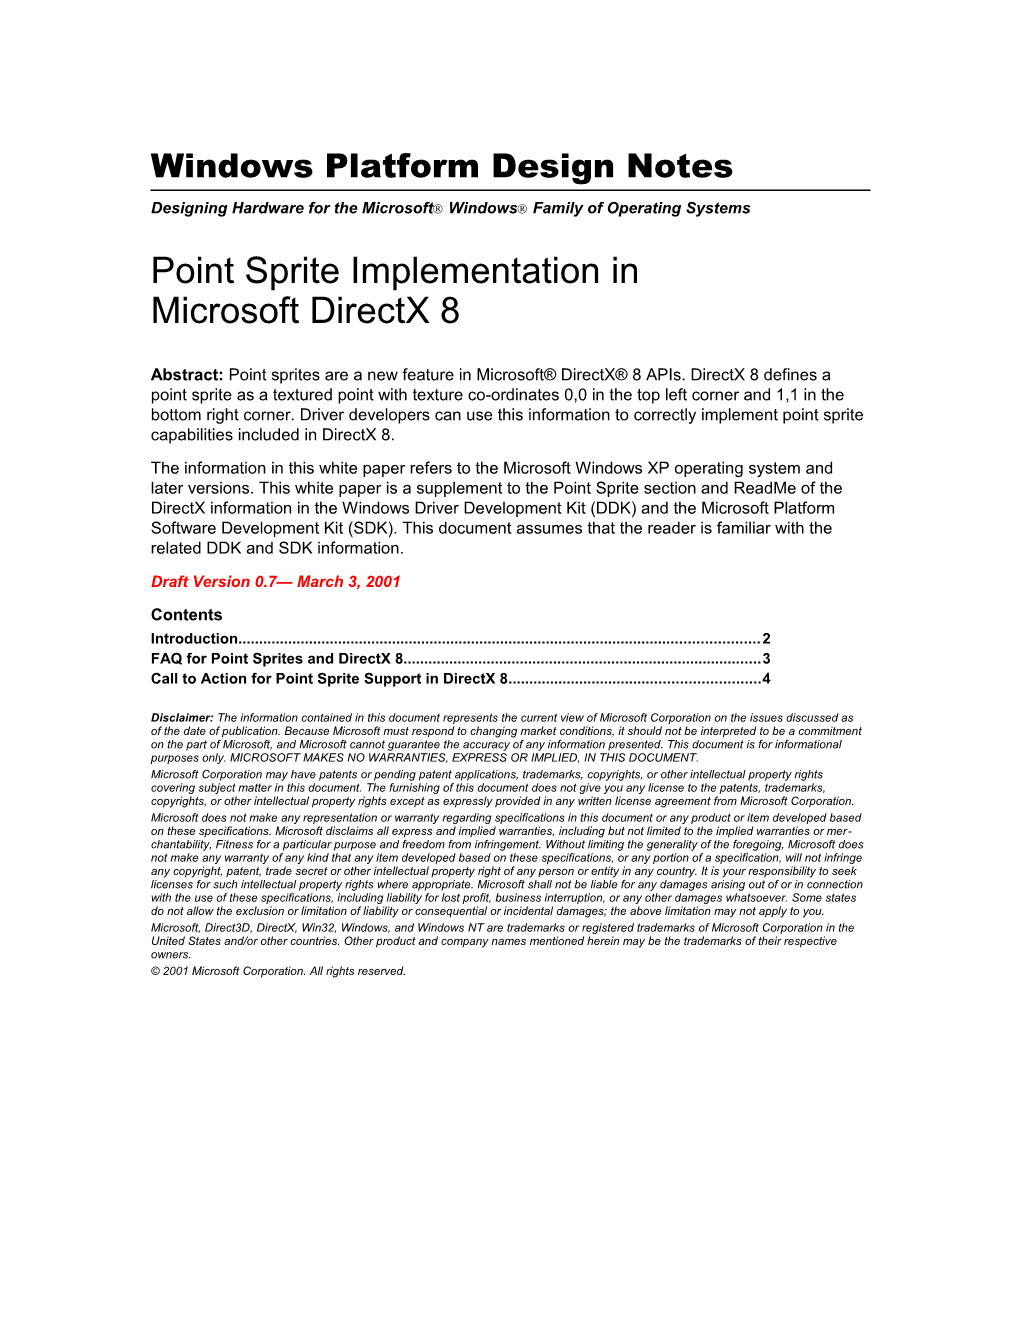 Point Sprite Implementation in Microsoft Directx 8